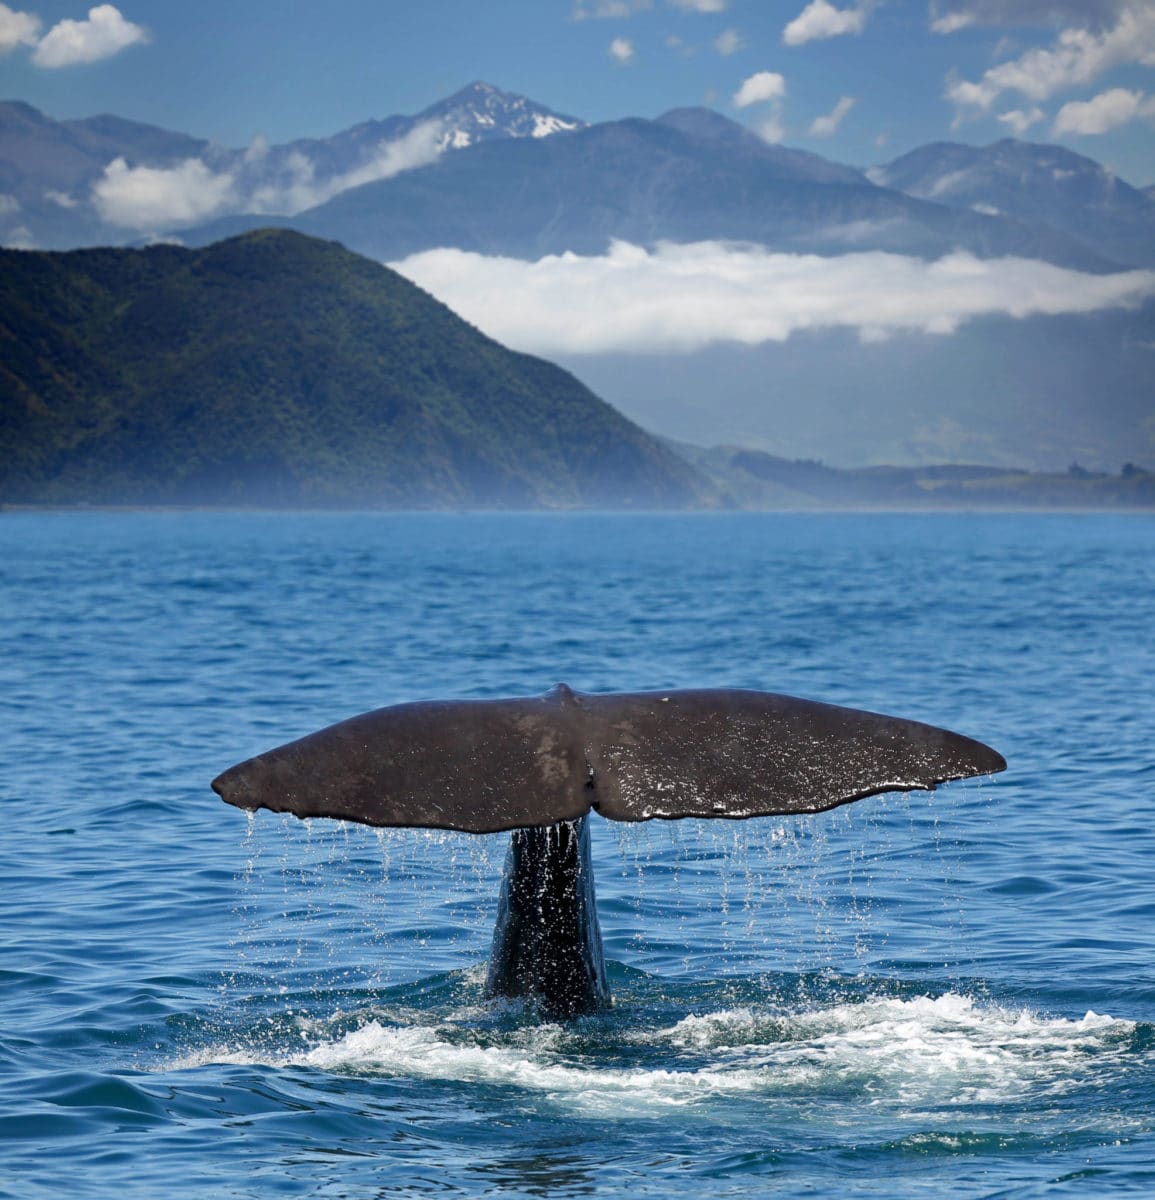 Sperm Whale near Kaikoura, New Zealand